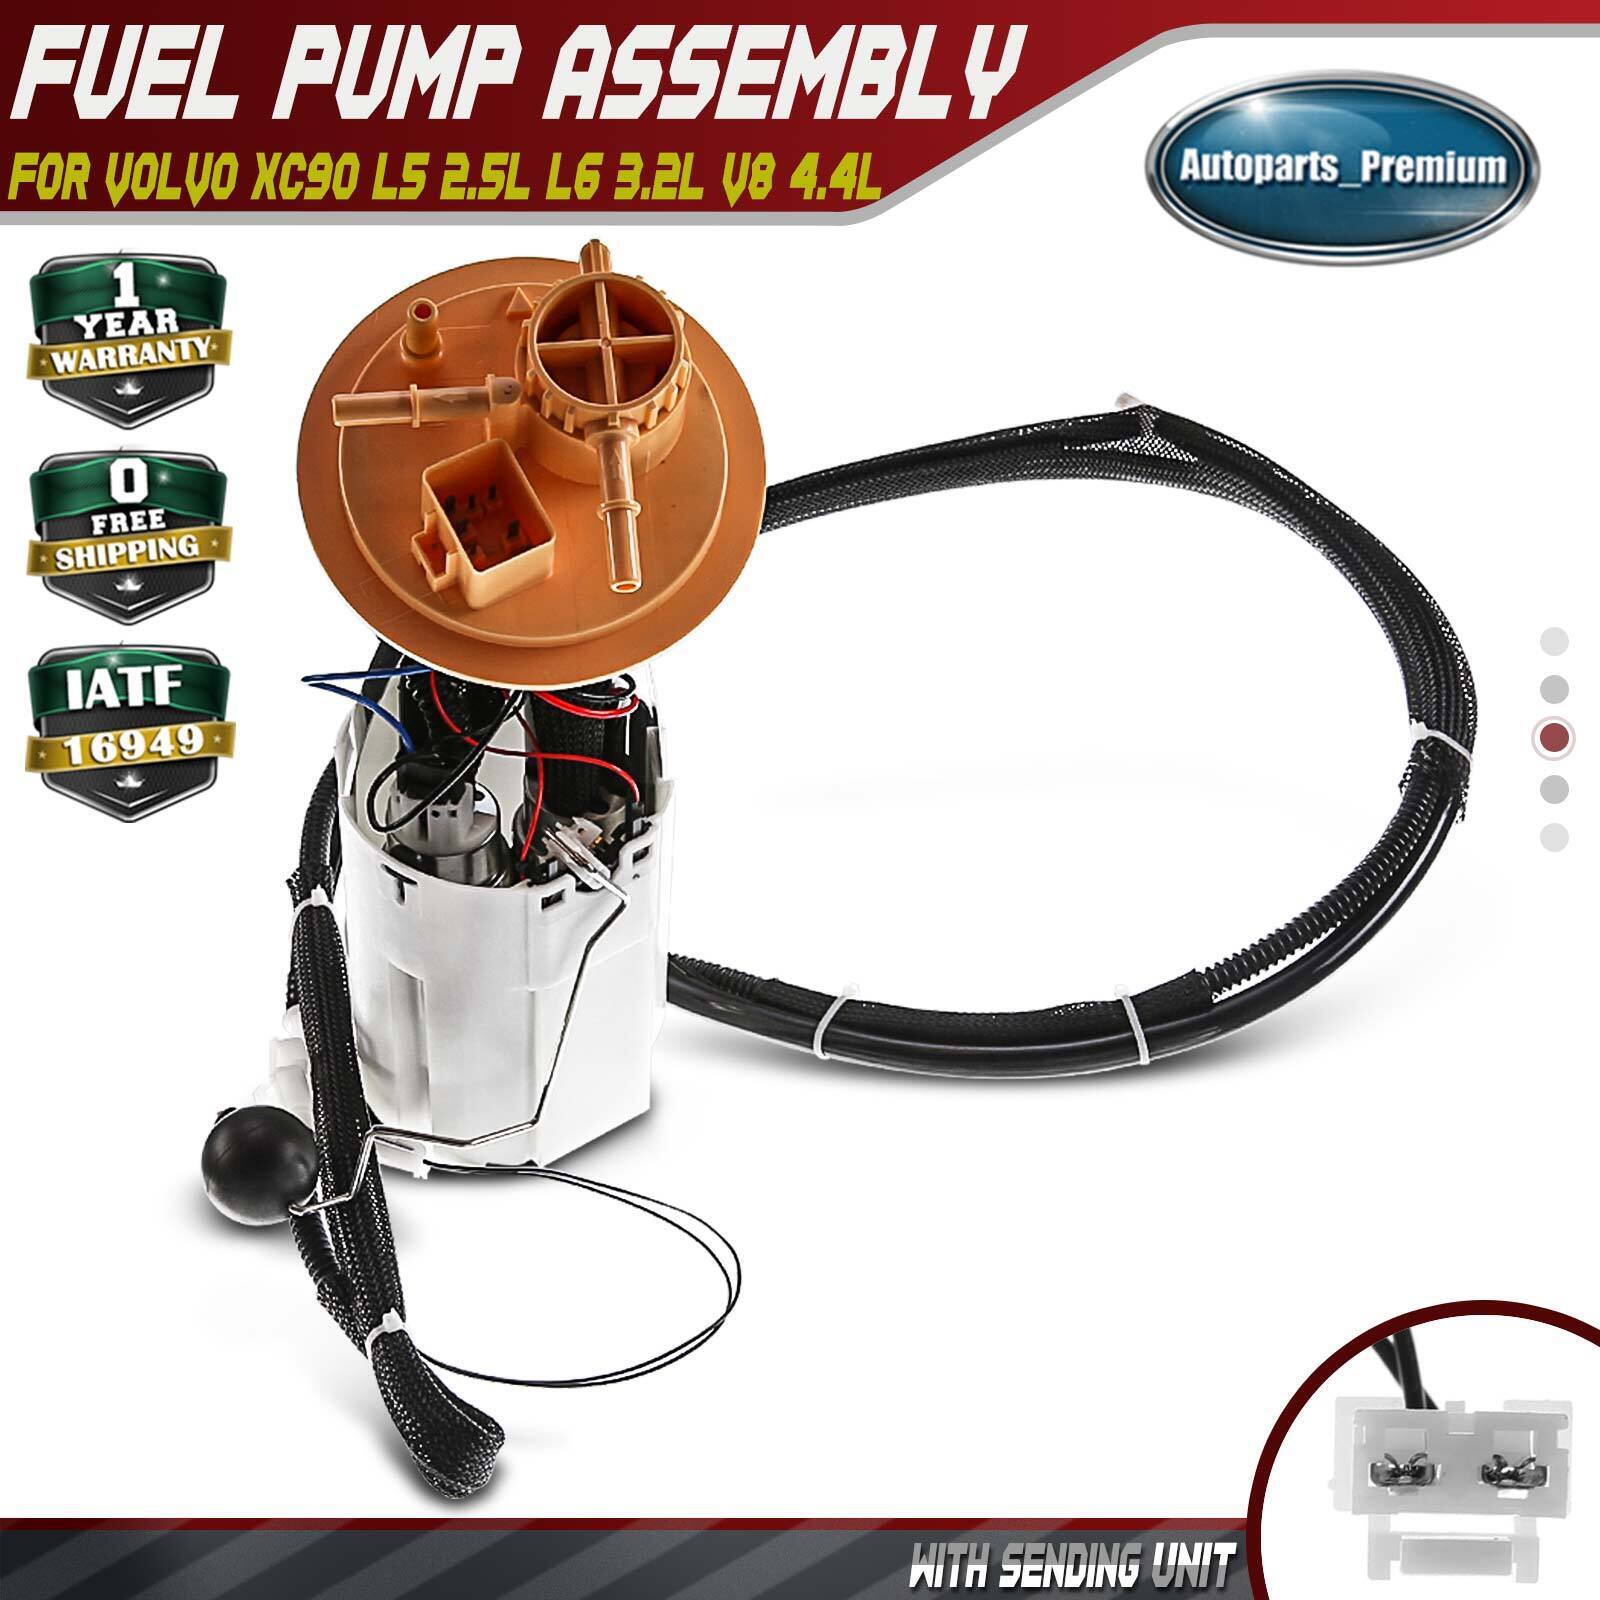 Fuel Pump Assembly w/ Sending Unit for Volvo XC90 l5 2.5L l6 3.2L V8 4.4L E8846M